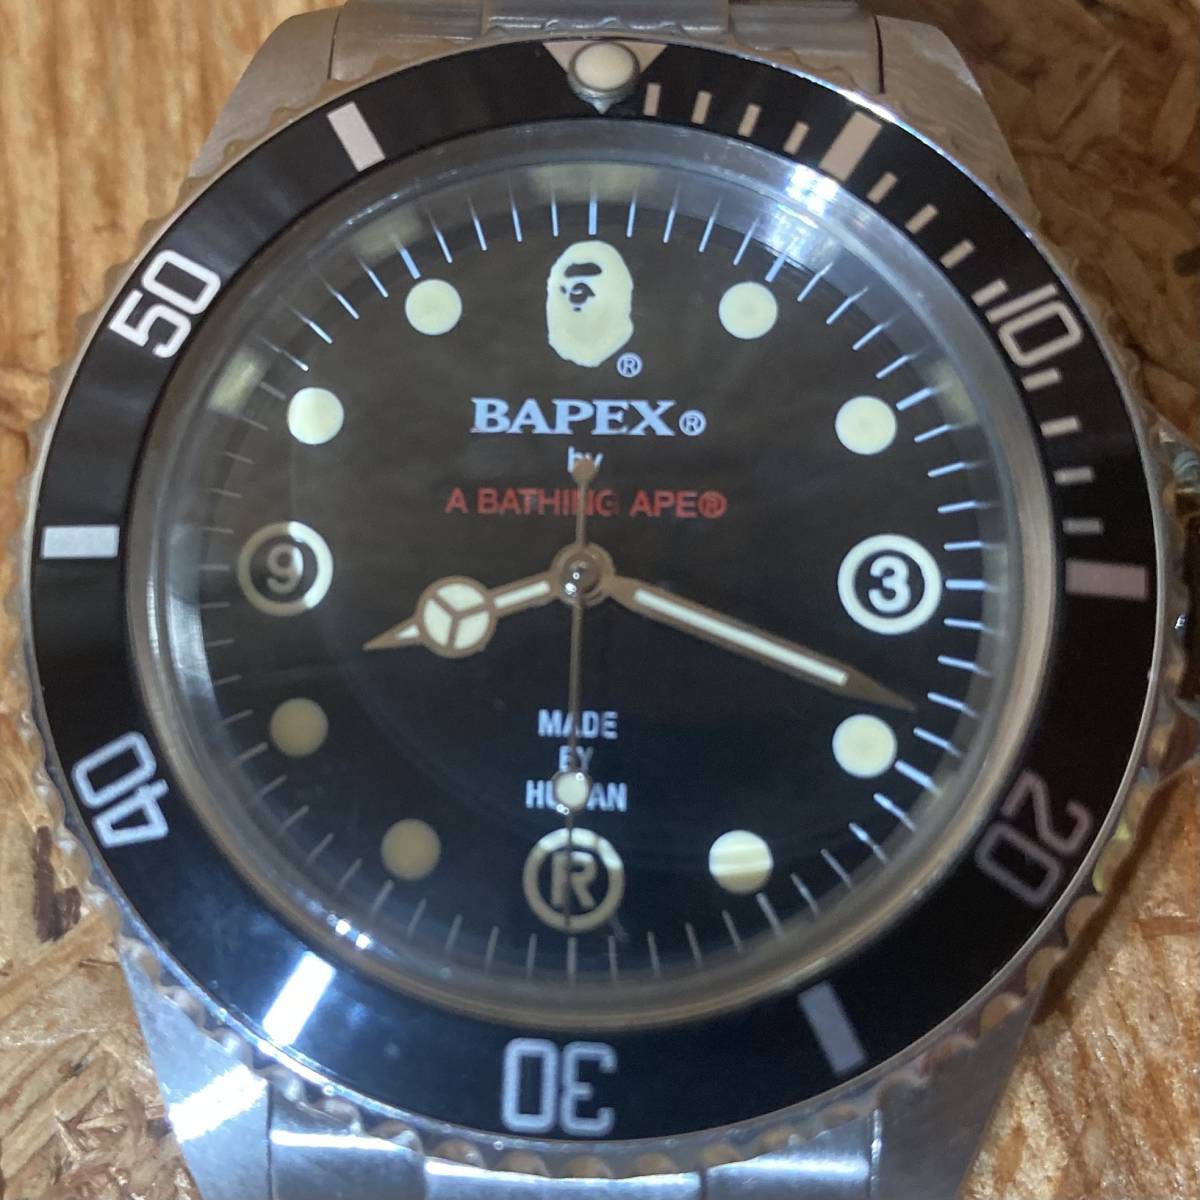 A BATHING APE BAPEX 自動巻き オートマチック 腕時計